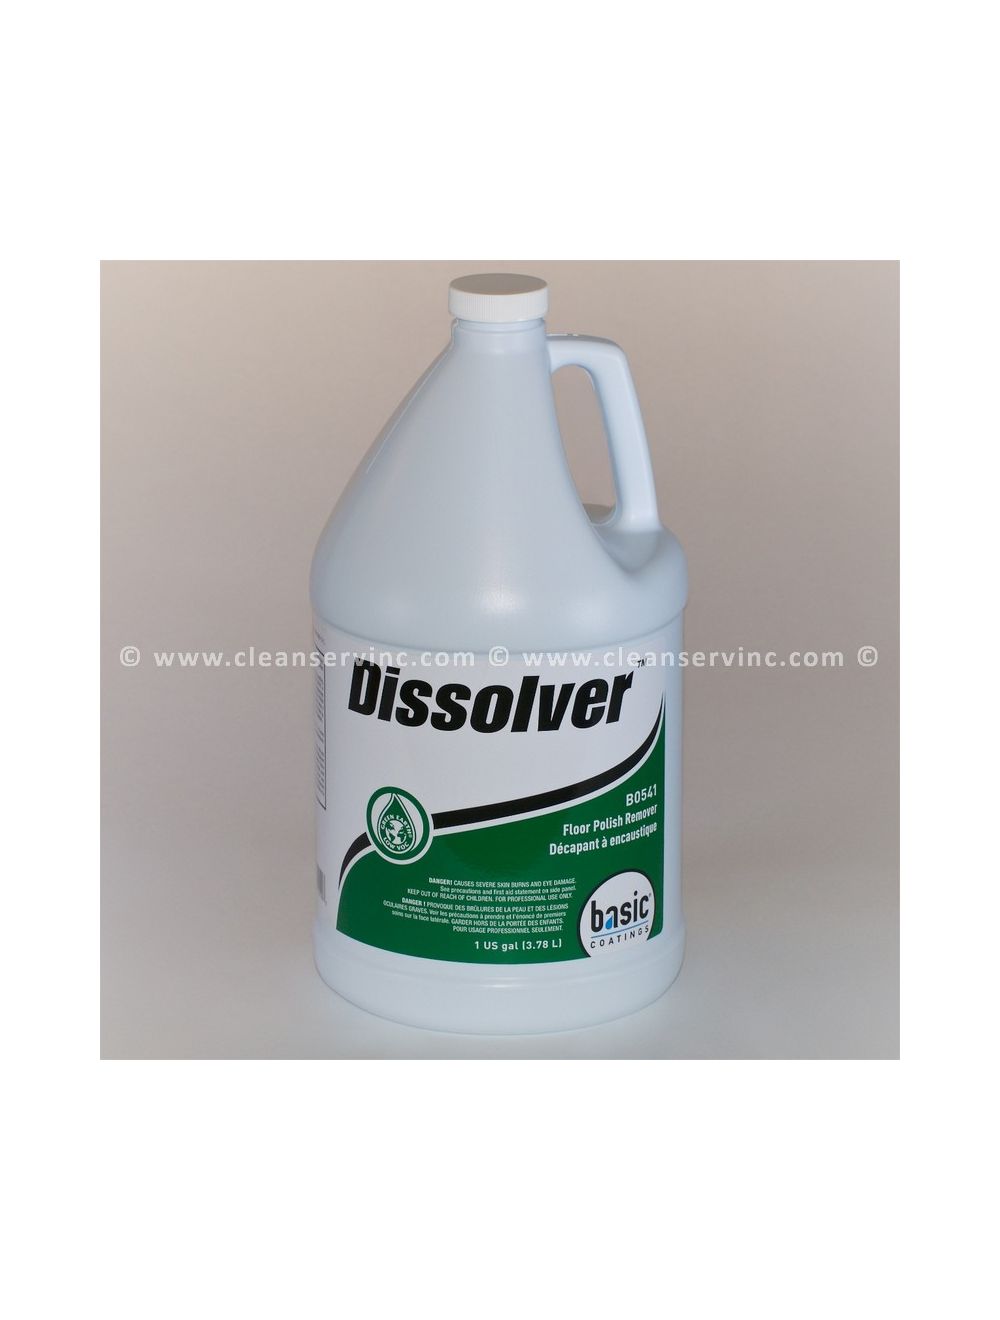 Dissolver Floor Polish Remover Gallon, Hardwood Floor Polish Remover